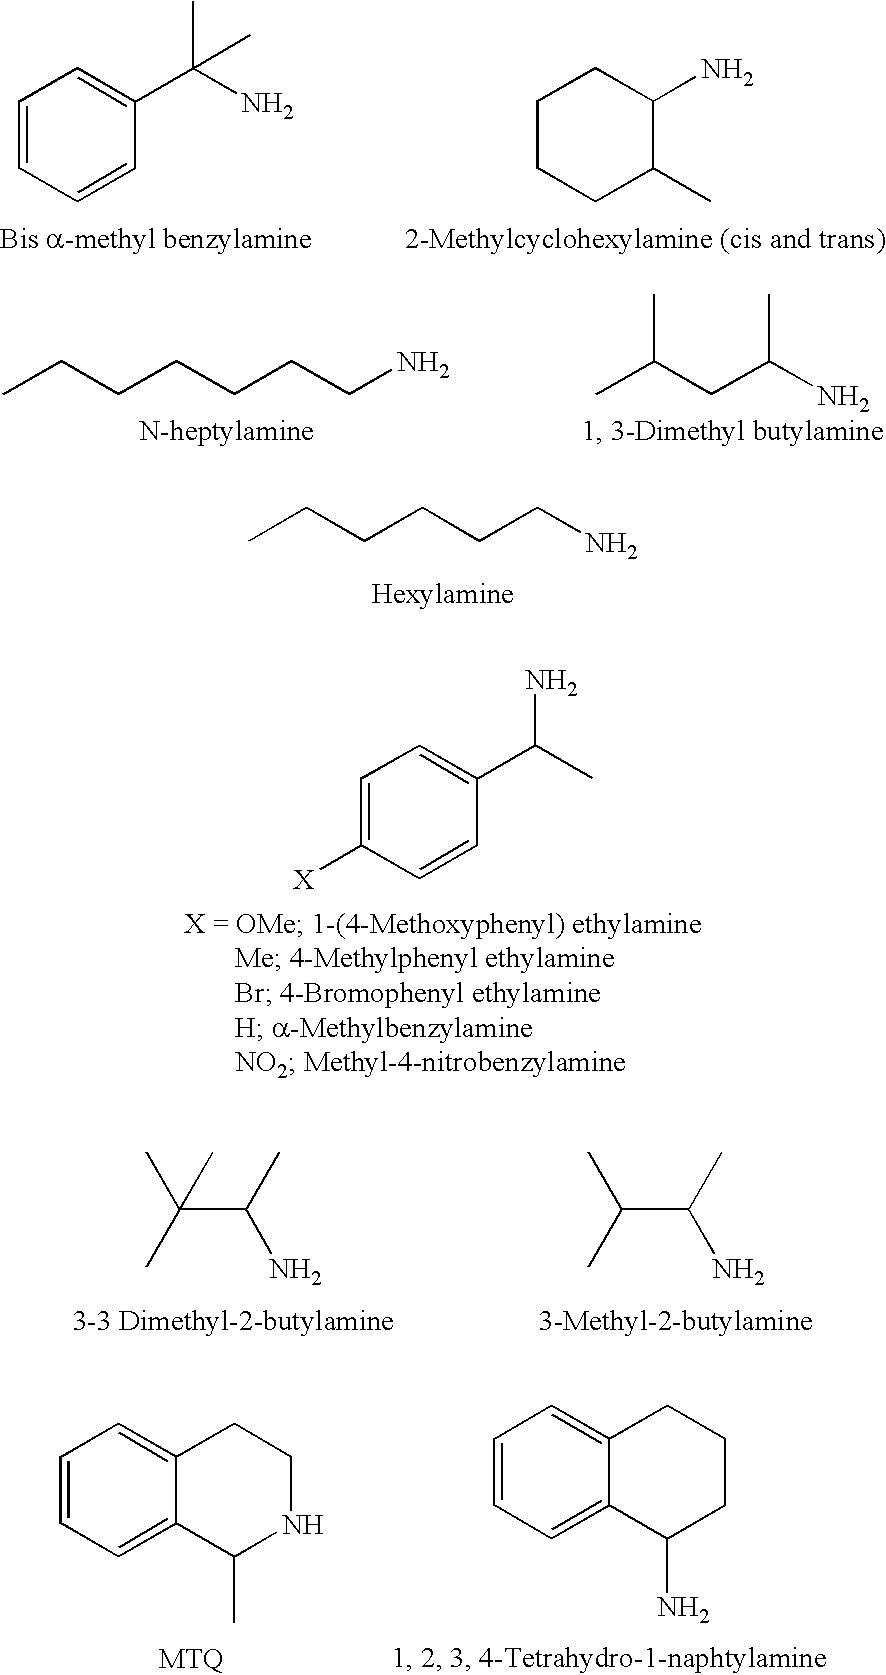 Deracemisation of amines